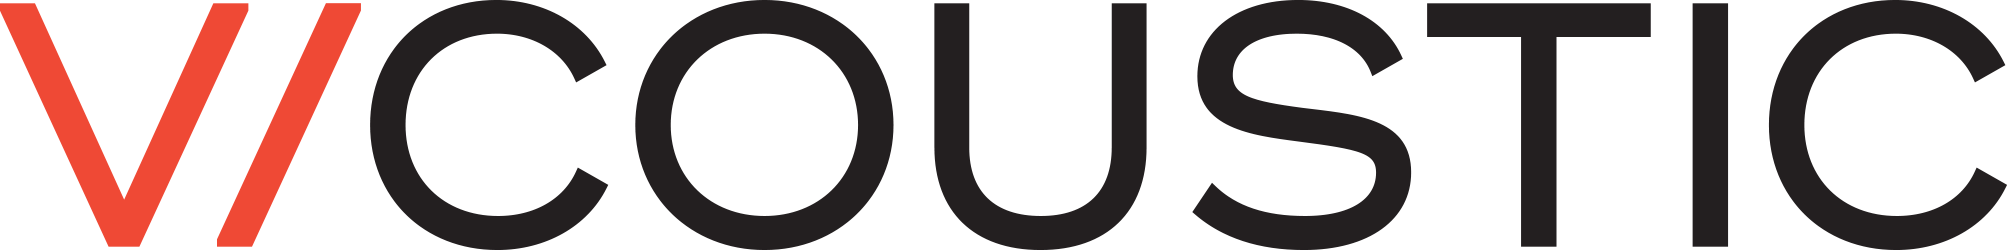 VCOUSTIC Logo.png